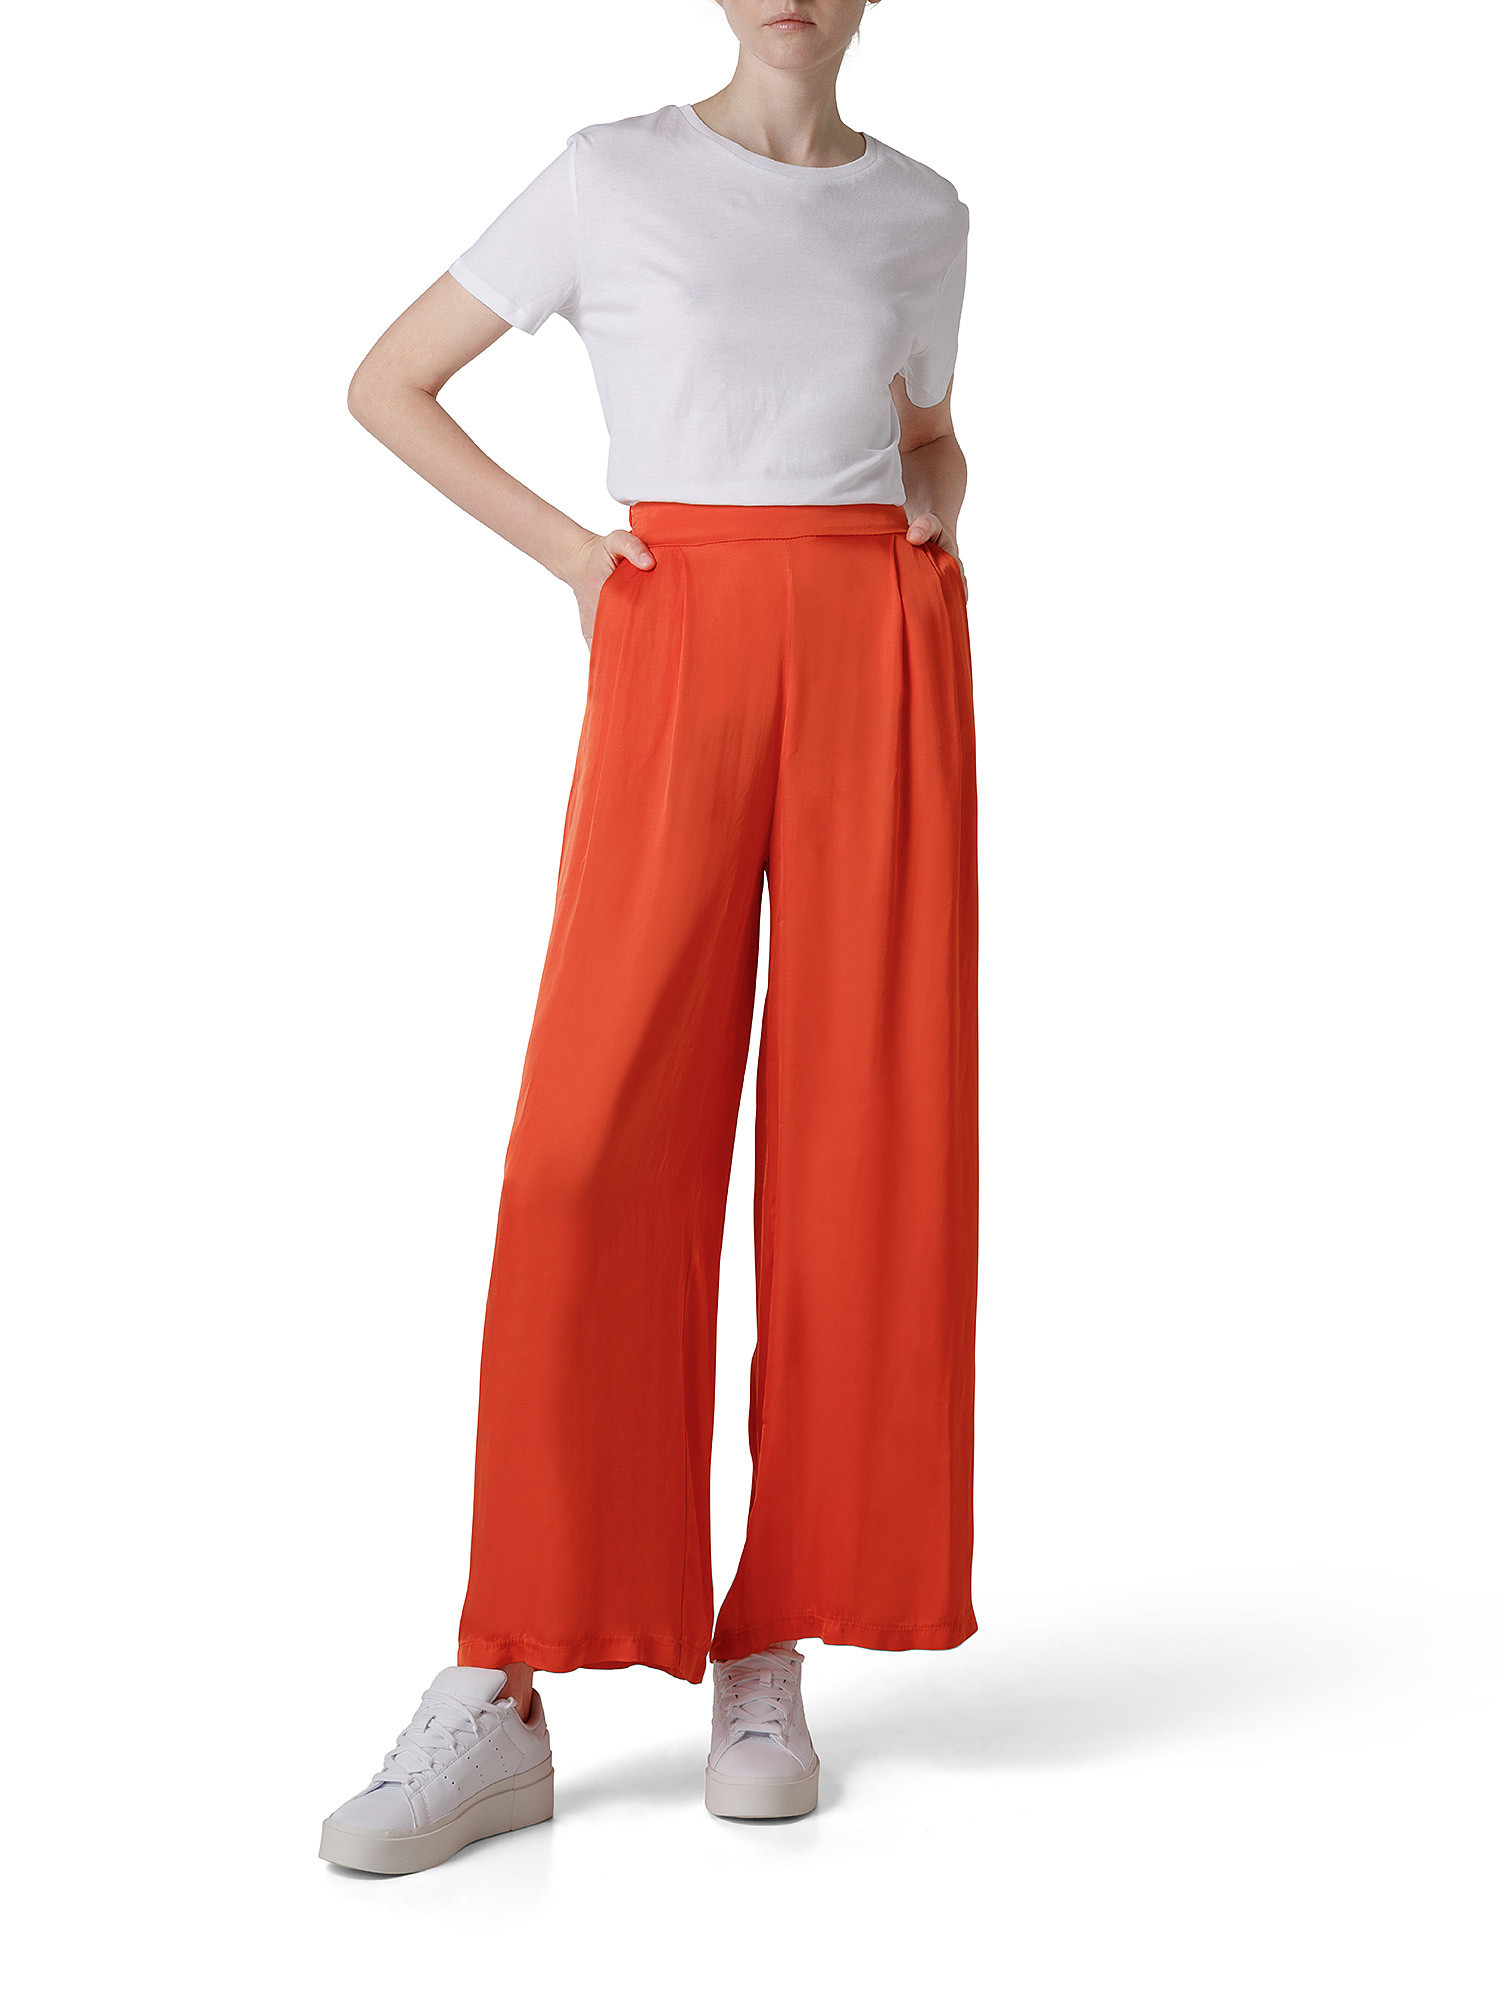 Pantalone in viscosa, Arancione, large image number 2